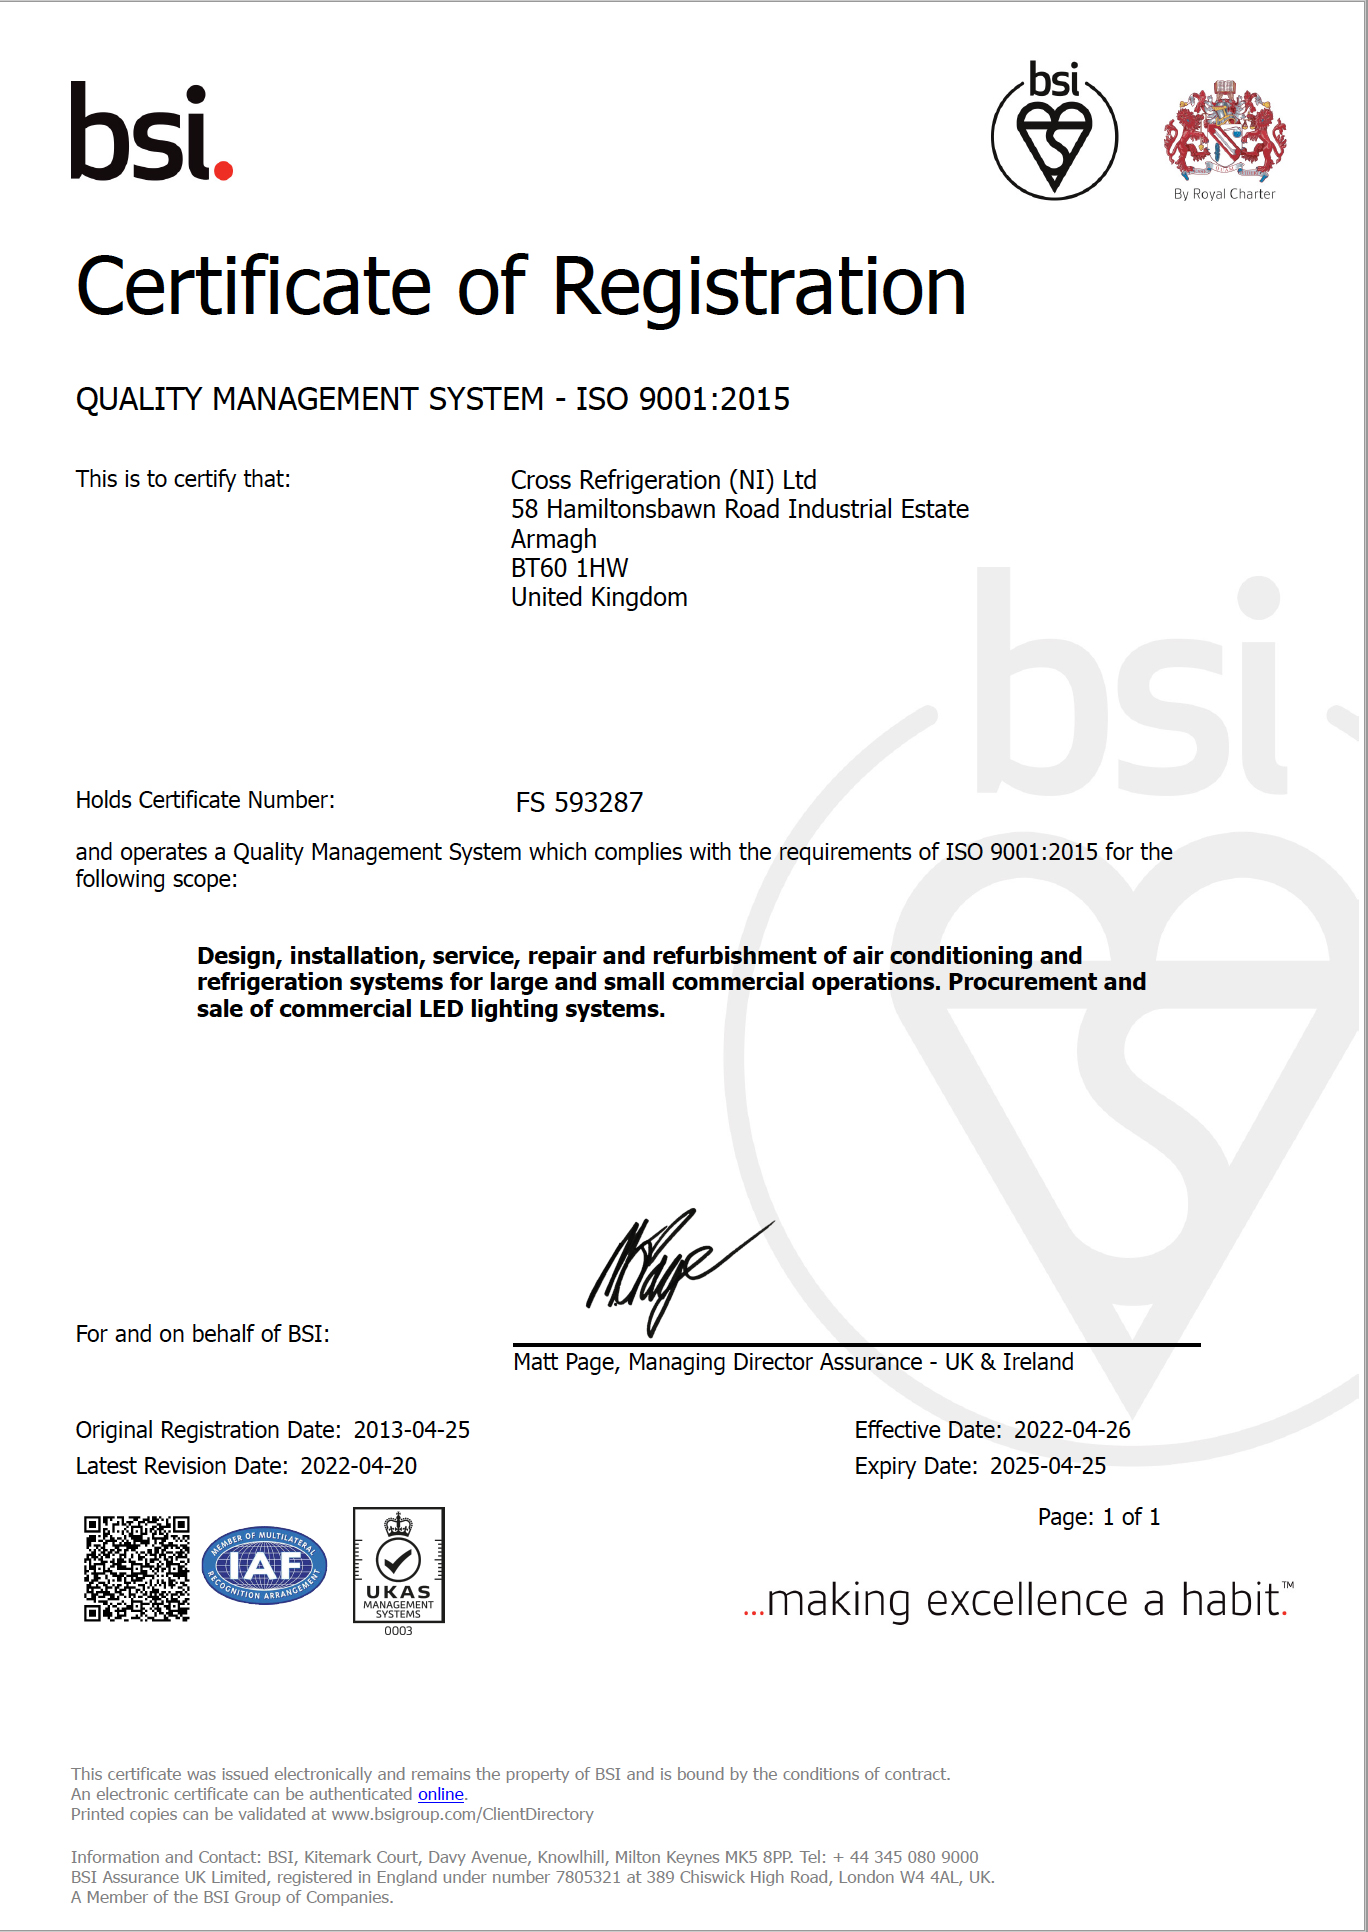 bsi-Certificate-of-Registration-ISO-9001